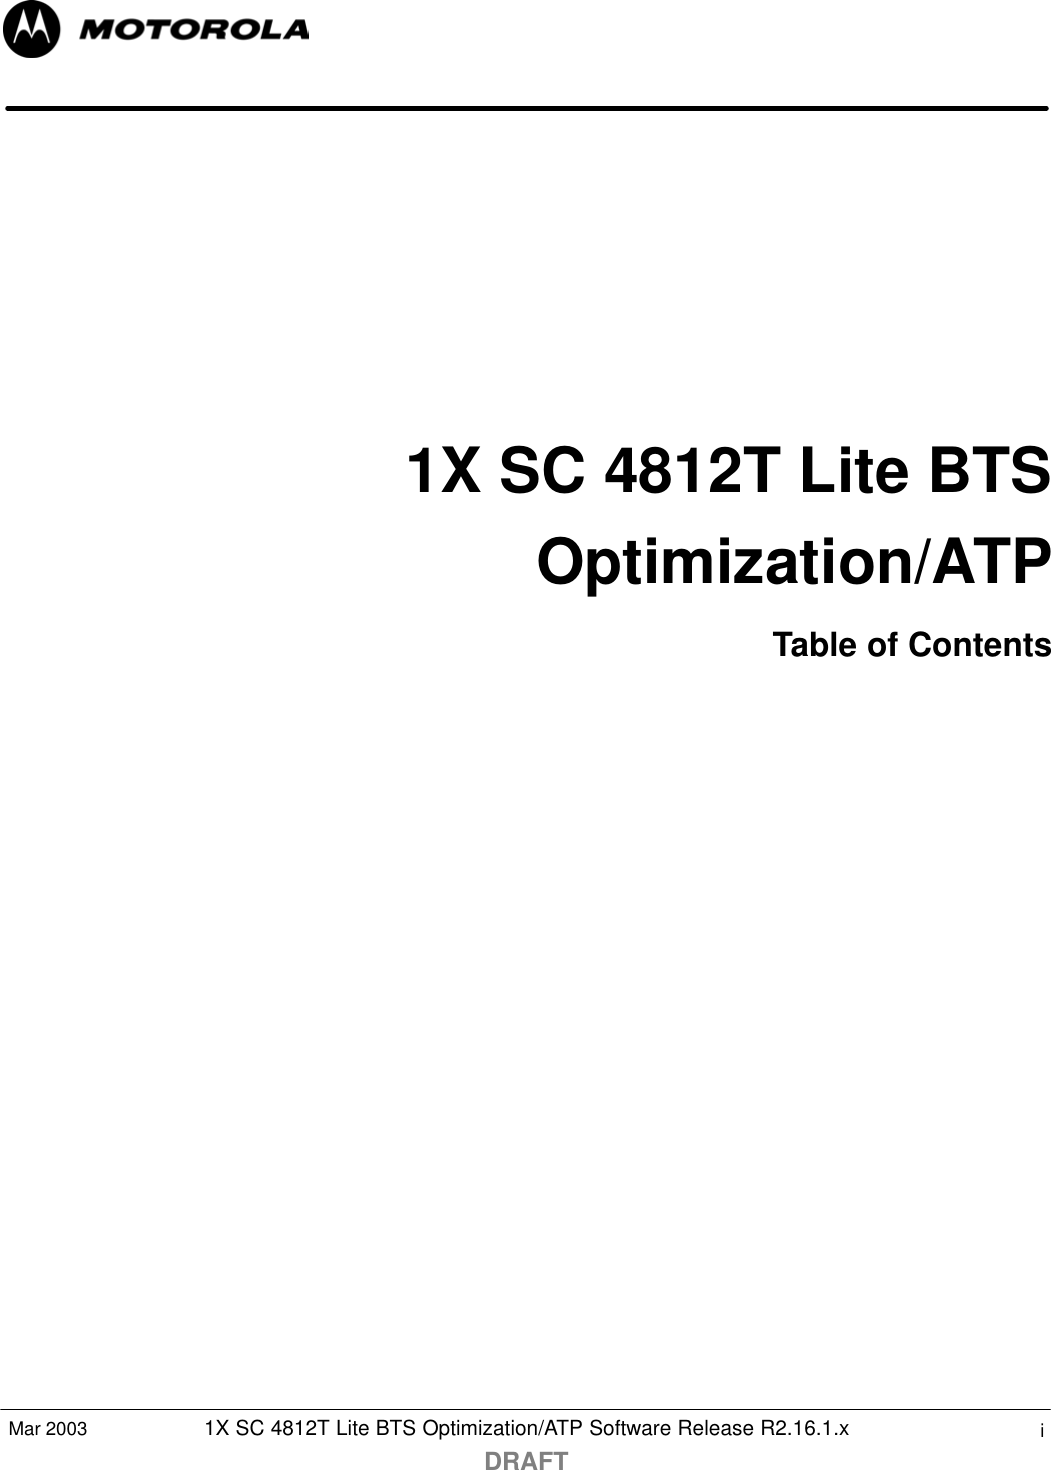 1X SC 4812T Lite BTS Optimization/ATP Software Release R2.16.1.xDRAFTiMar 20031X SC 4812T Lite BTSOptimization/ATPTable of Contents...